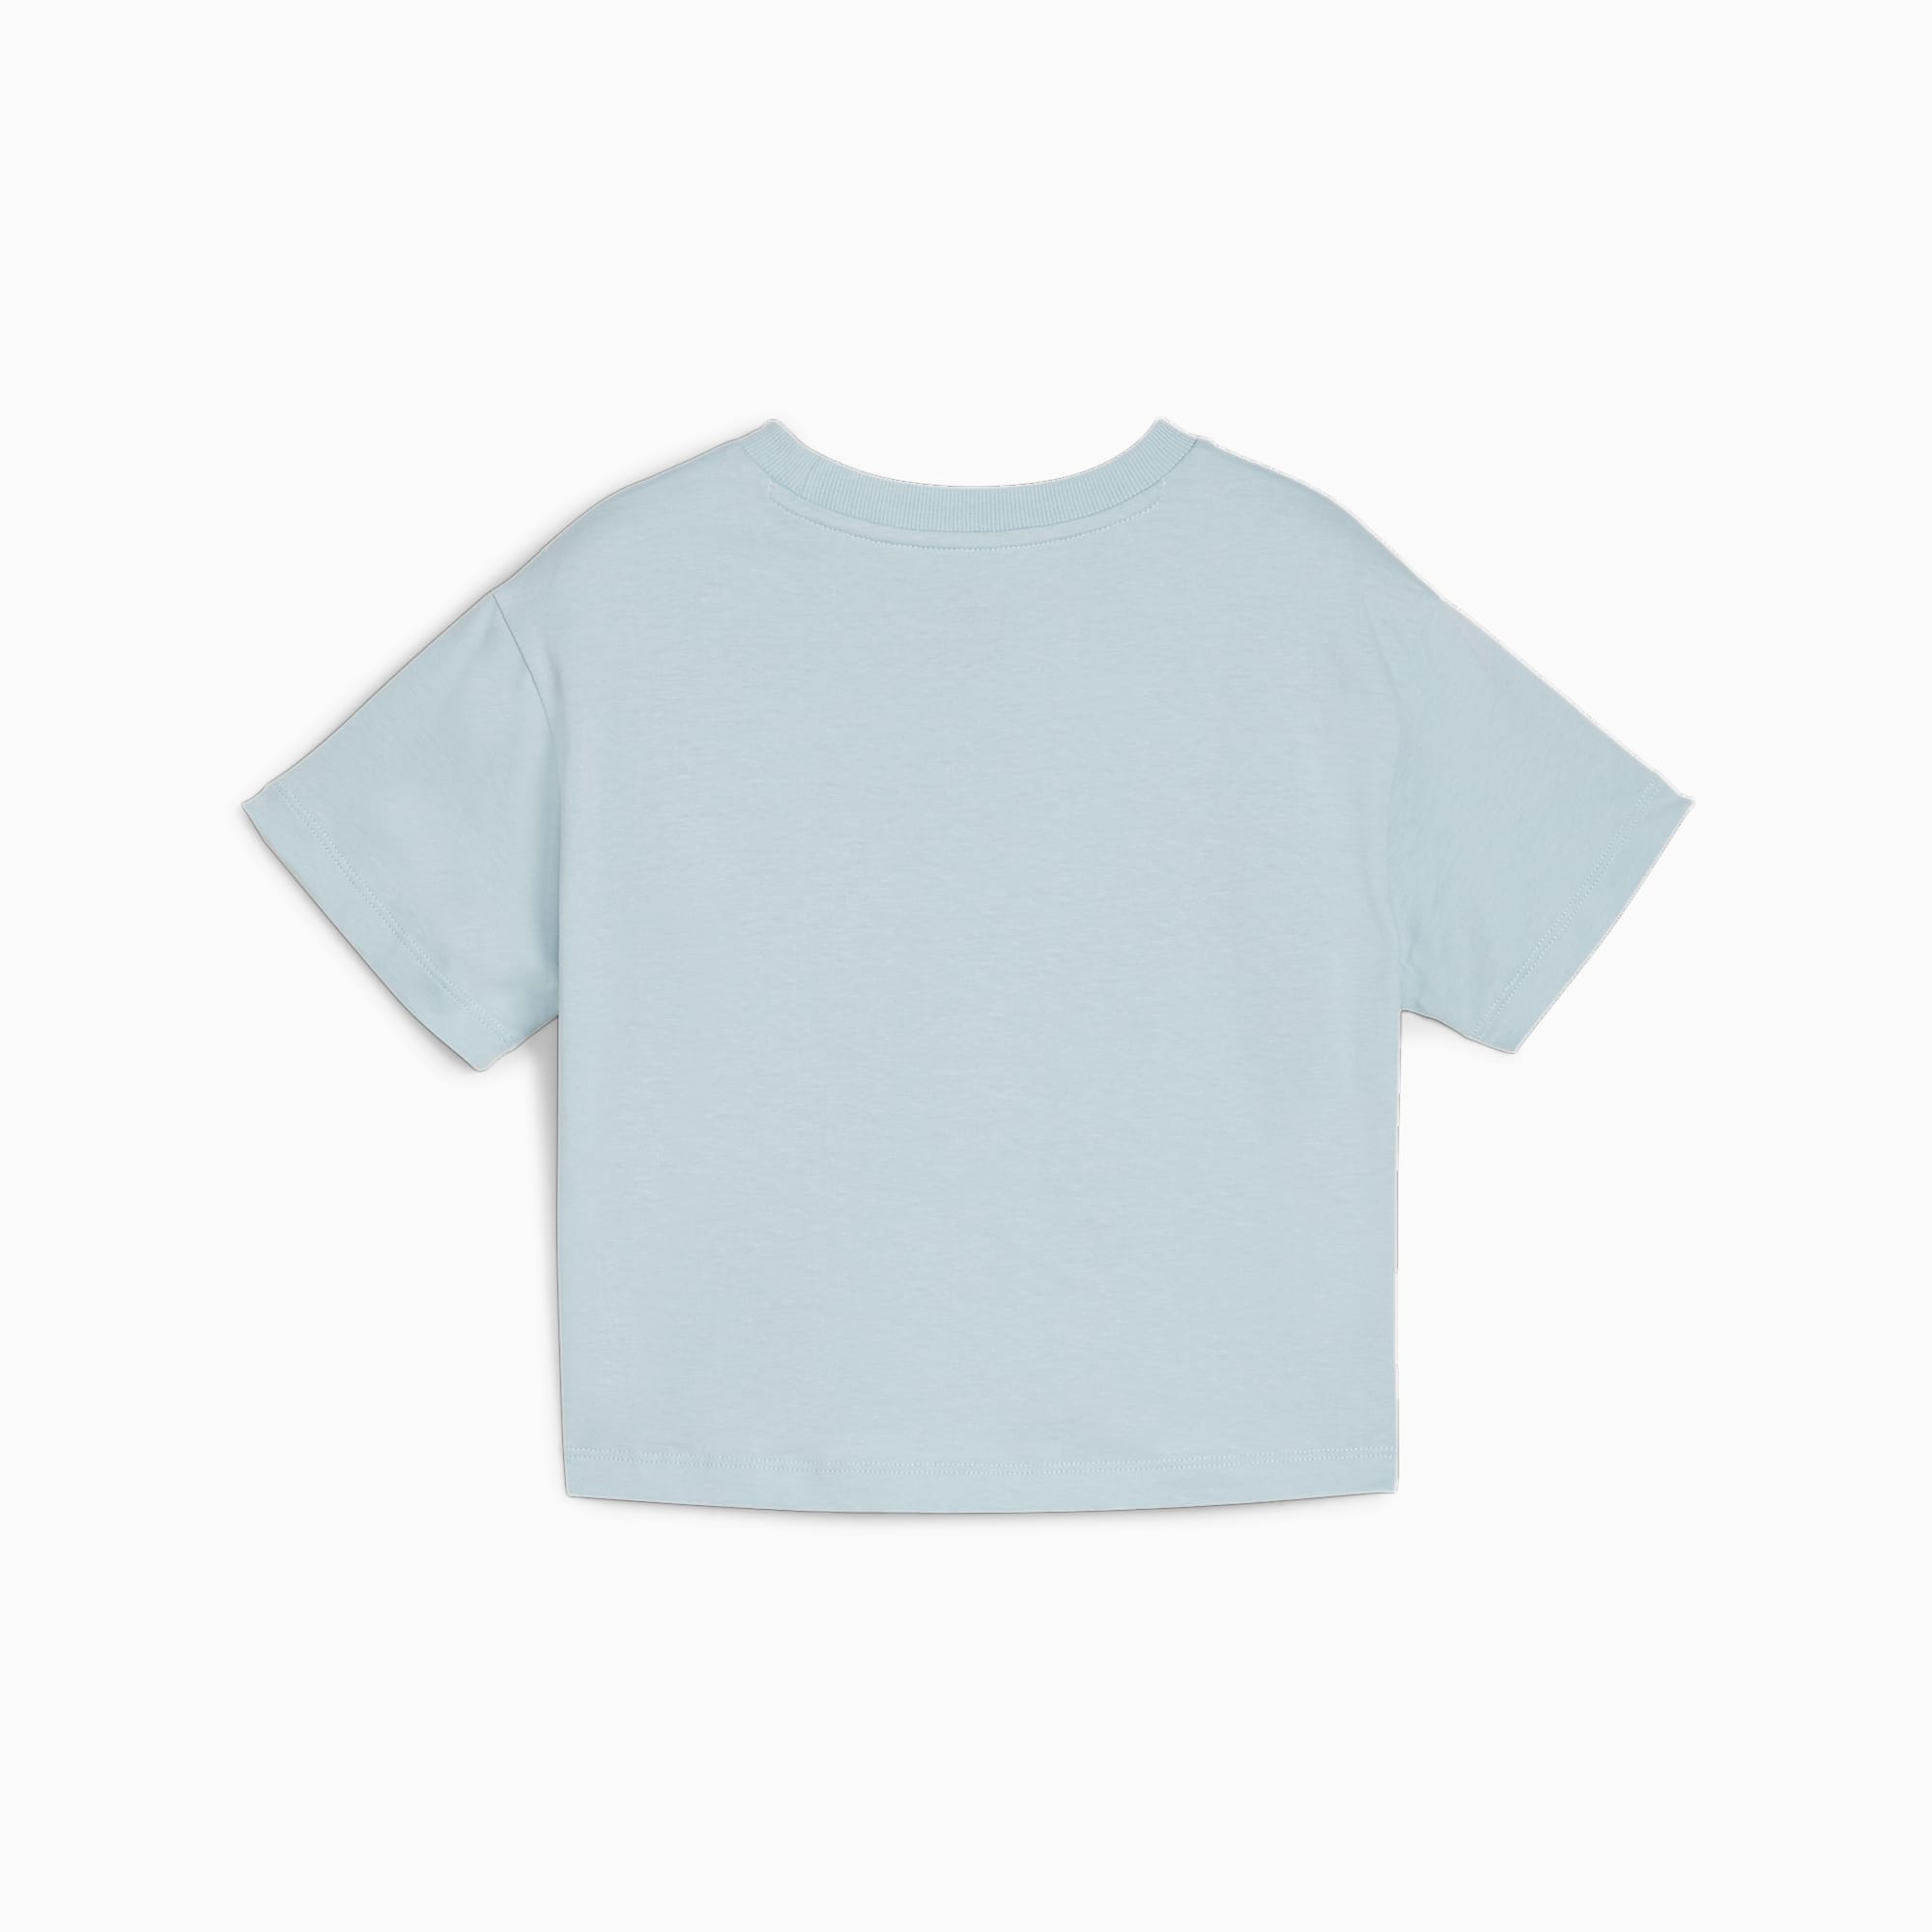 PUMA Ess+ Blossom Youth Short T-Shirt, Turquoise Surf